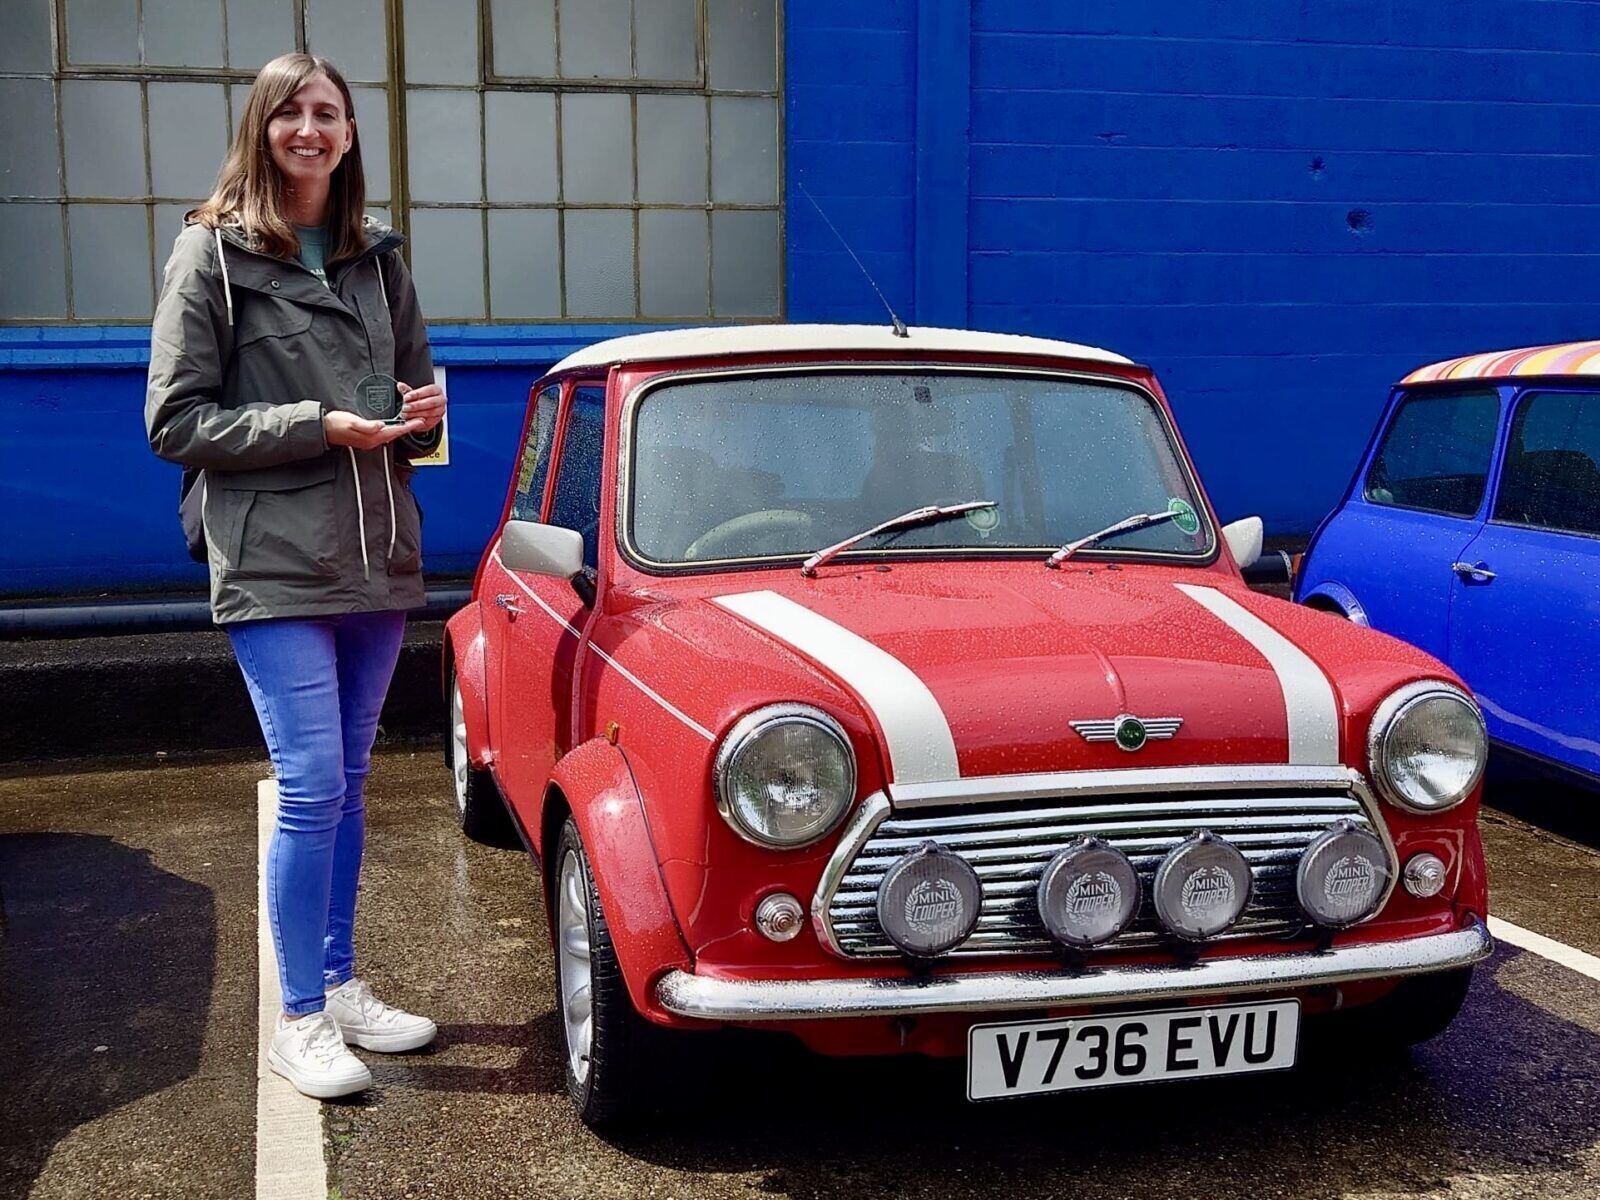 Staffordshire woman’s 'stunning' 1999 Rover Mini wins award